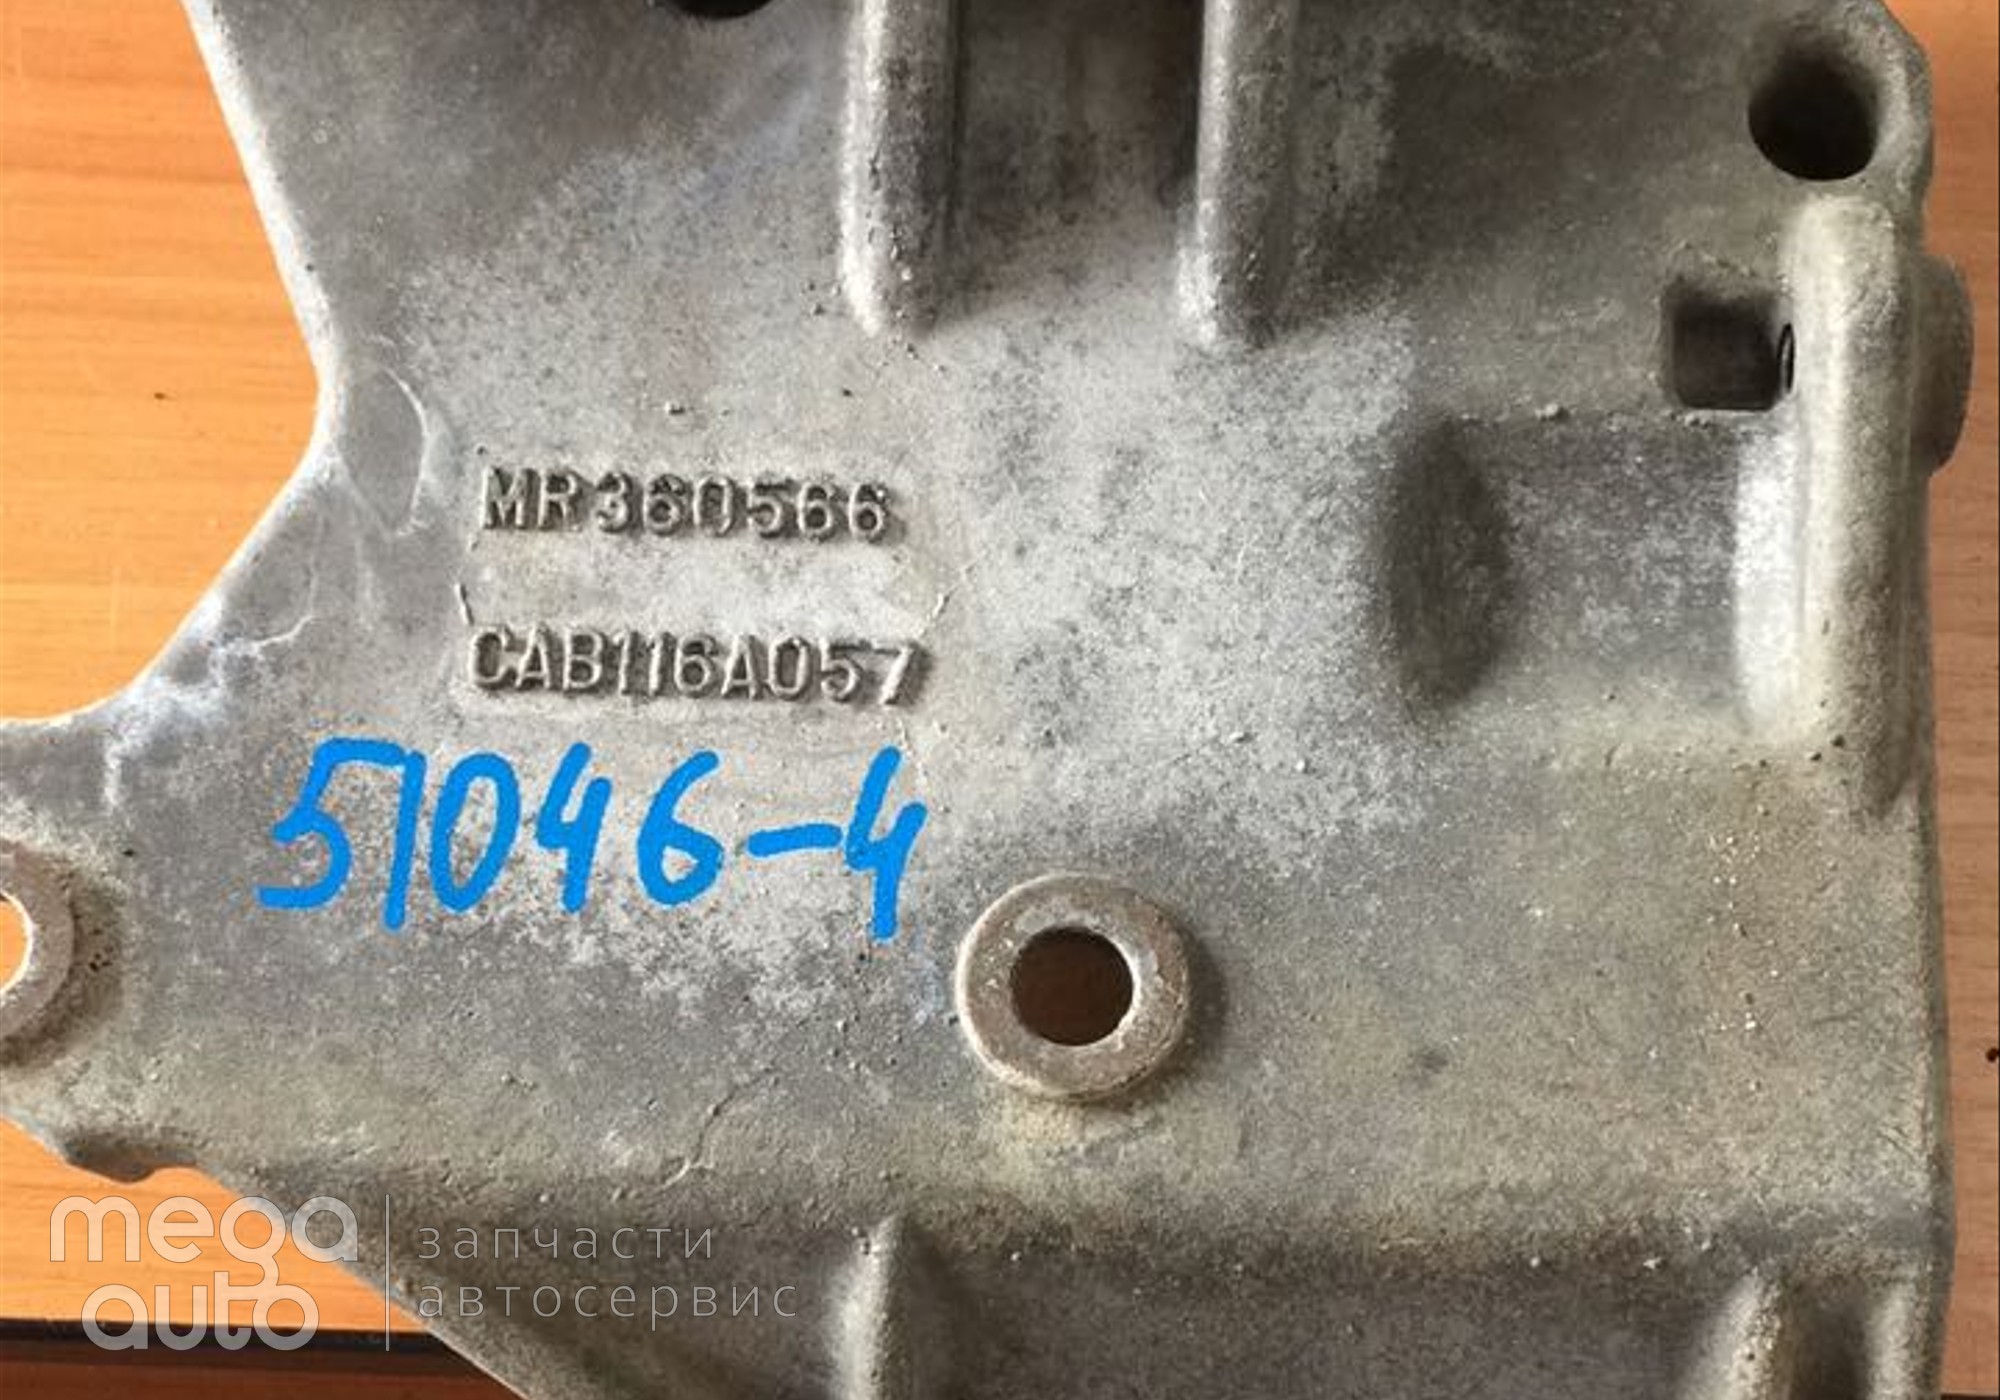 MR360566 Кронштейн кондиционера митсубиси лансер